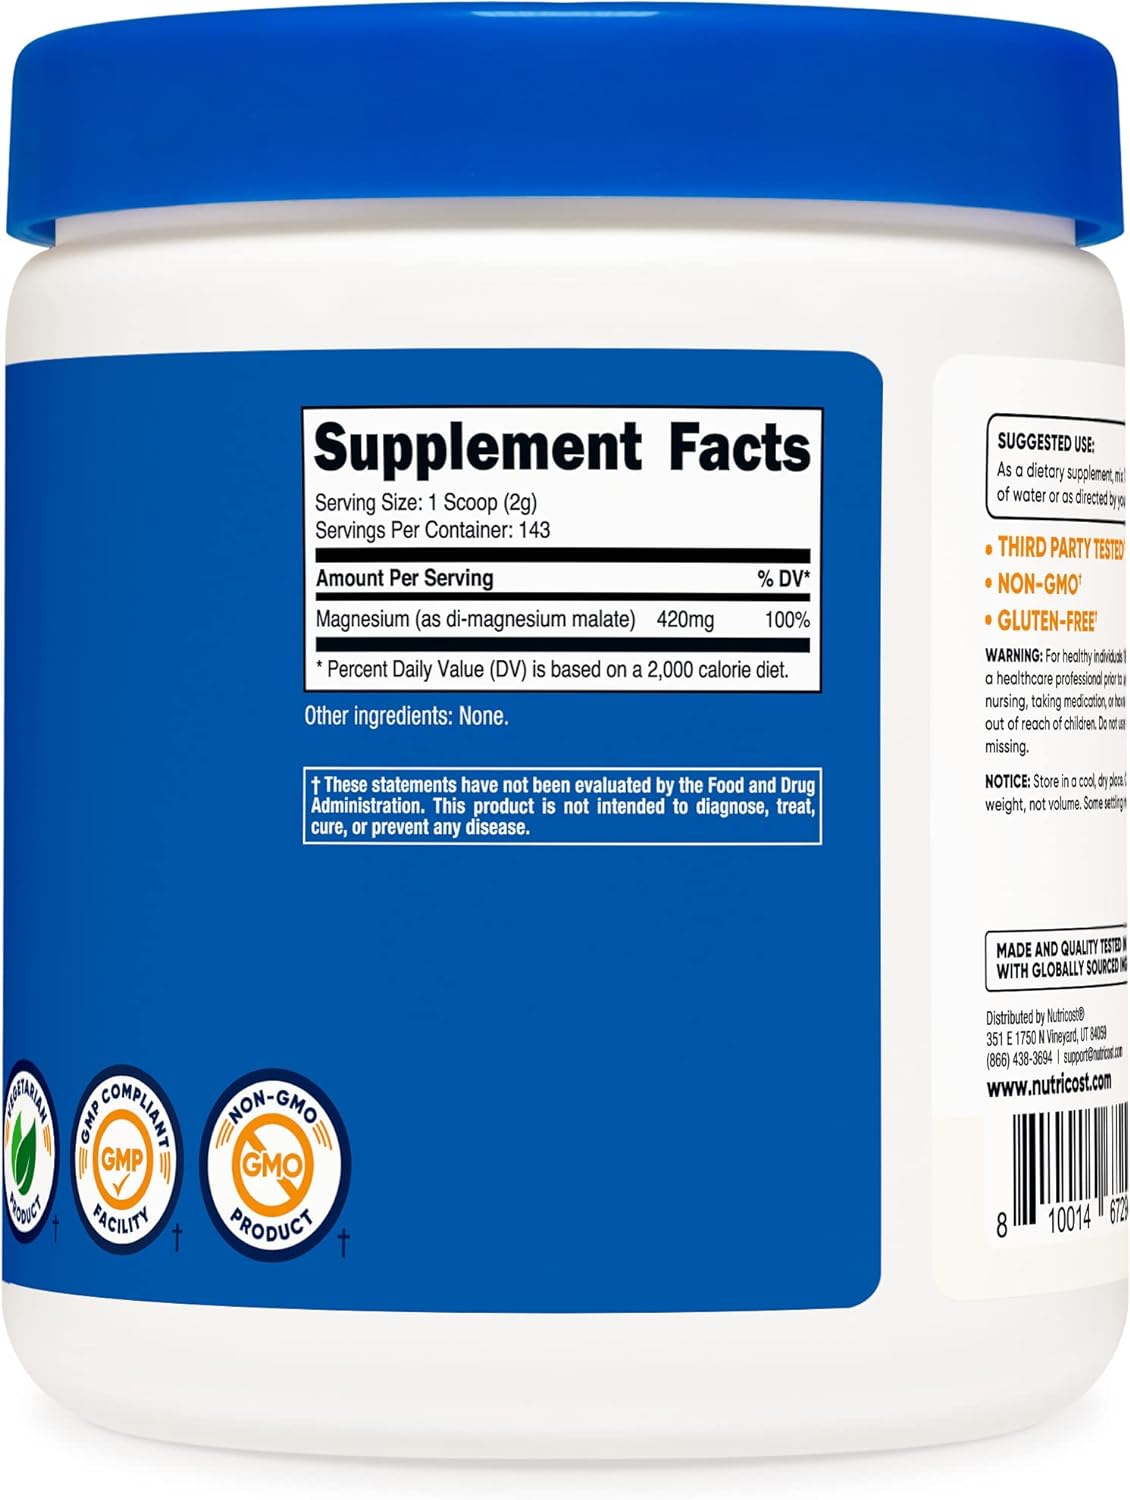  Nutricost Magnesium Malate Powder (300g) - 420mg of Magnesi